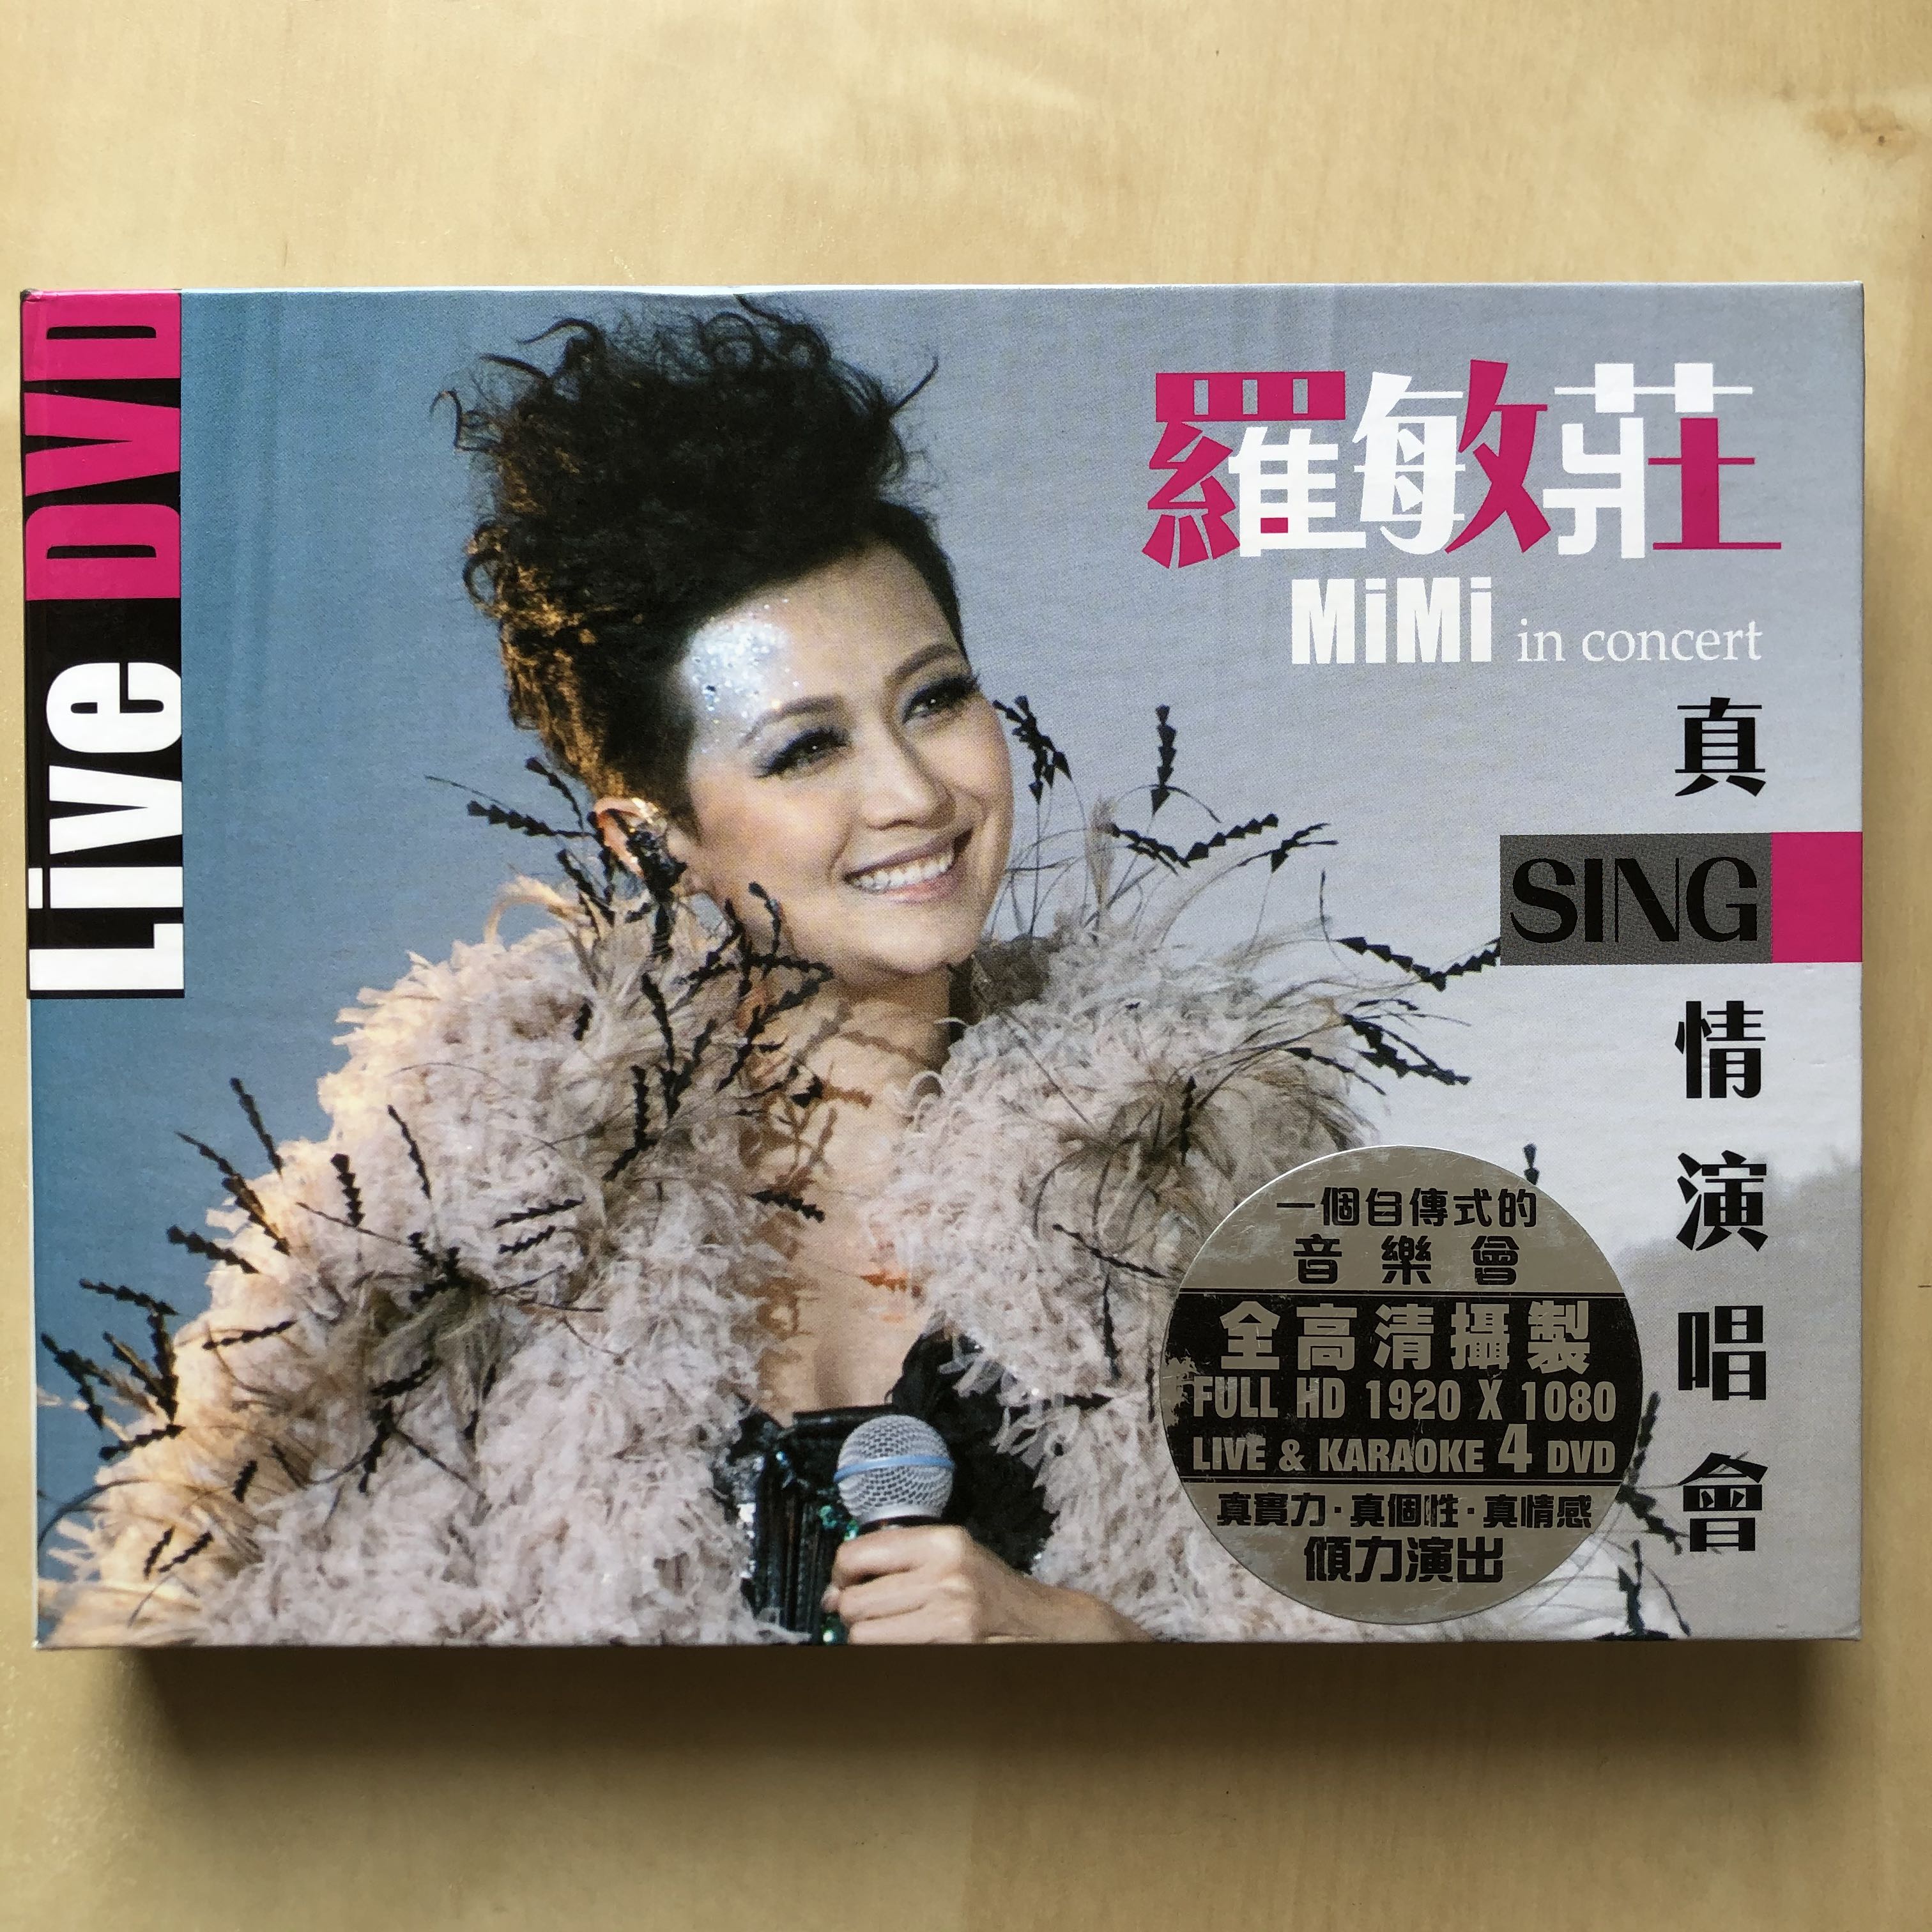 DVD丨羅敏莊真SING情演唱會Mimi in concert 4DVD, 興趣及遊戲